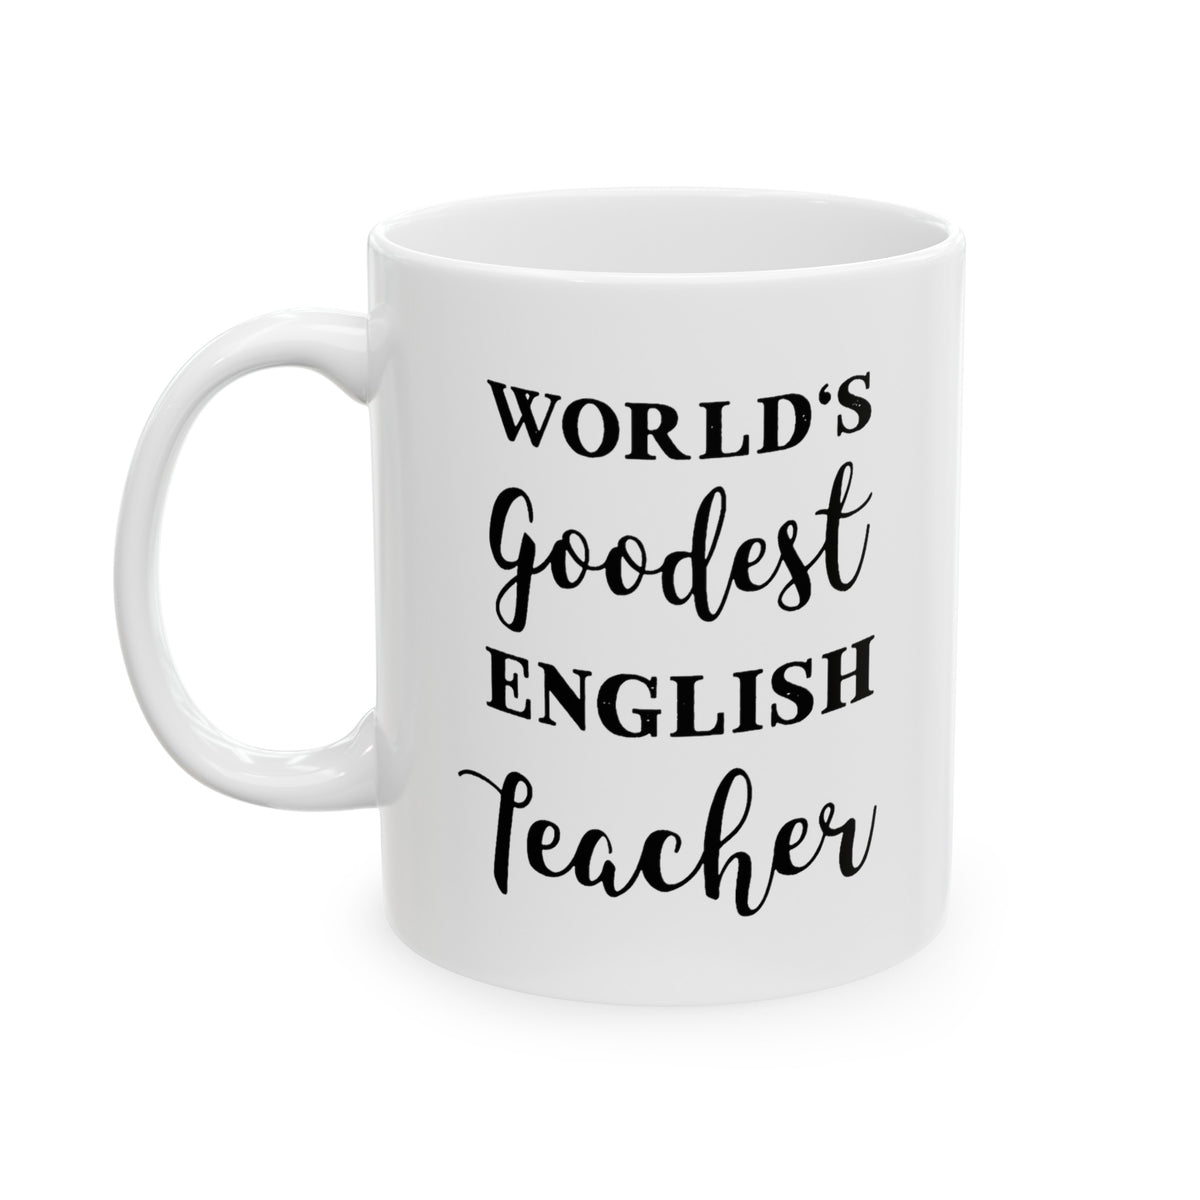 Fun Grammar Teacher Coffee Mug - World's goodest English Teacher Cup - Funny Gifts for Literature Majors & English